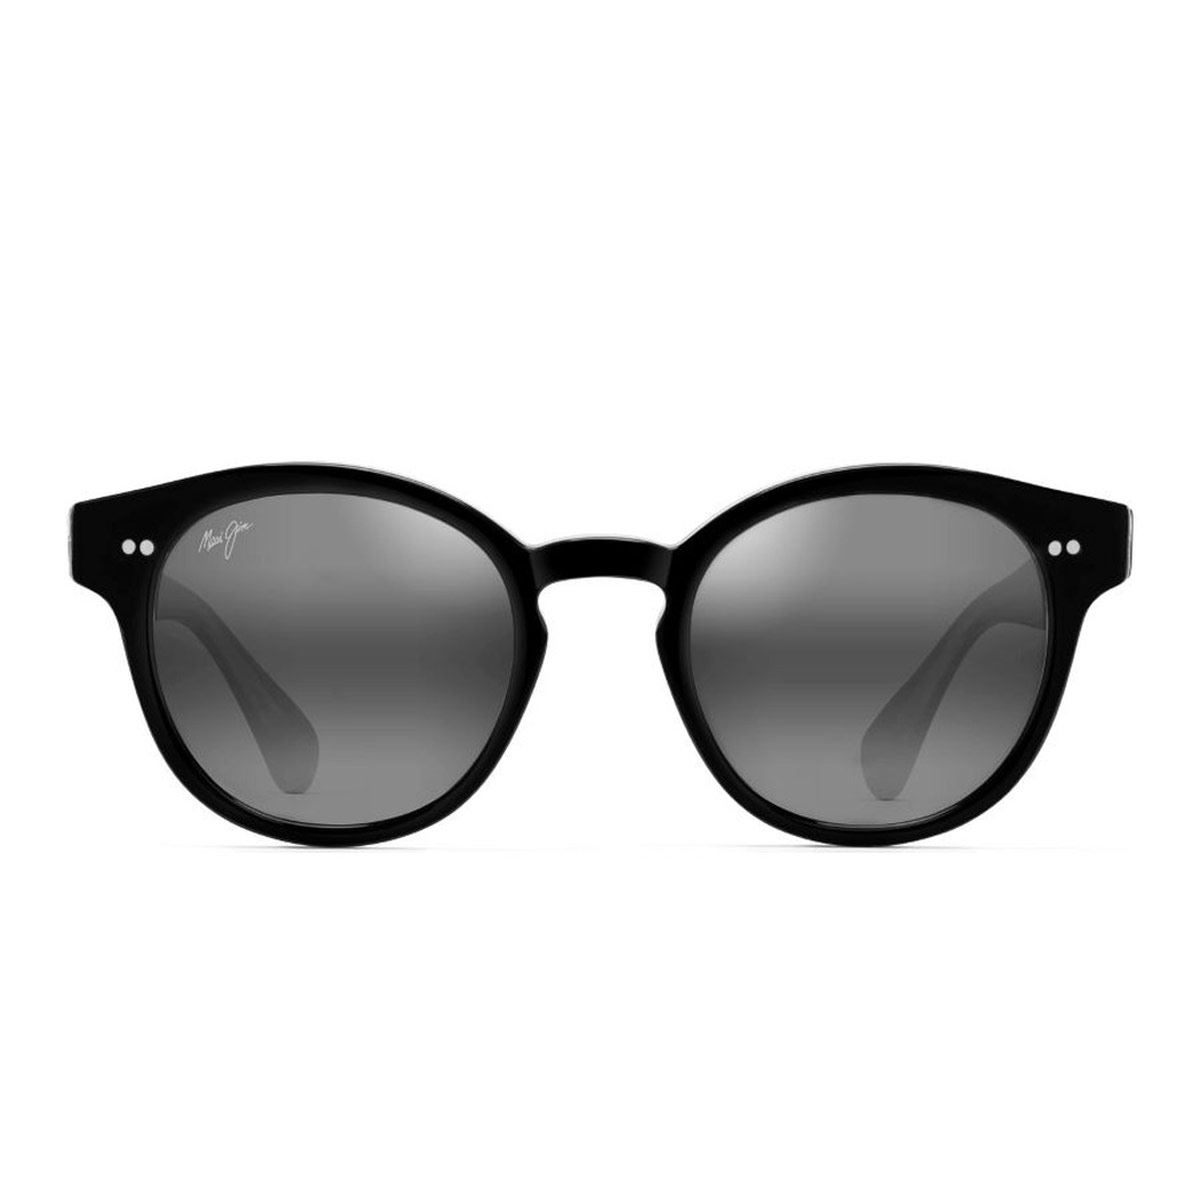 Lentes Gafas de Sol PANDAS Unisex para Hombre y Mujer Polarizados Cuadrados  Oscuros de Madera UV400